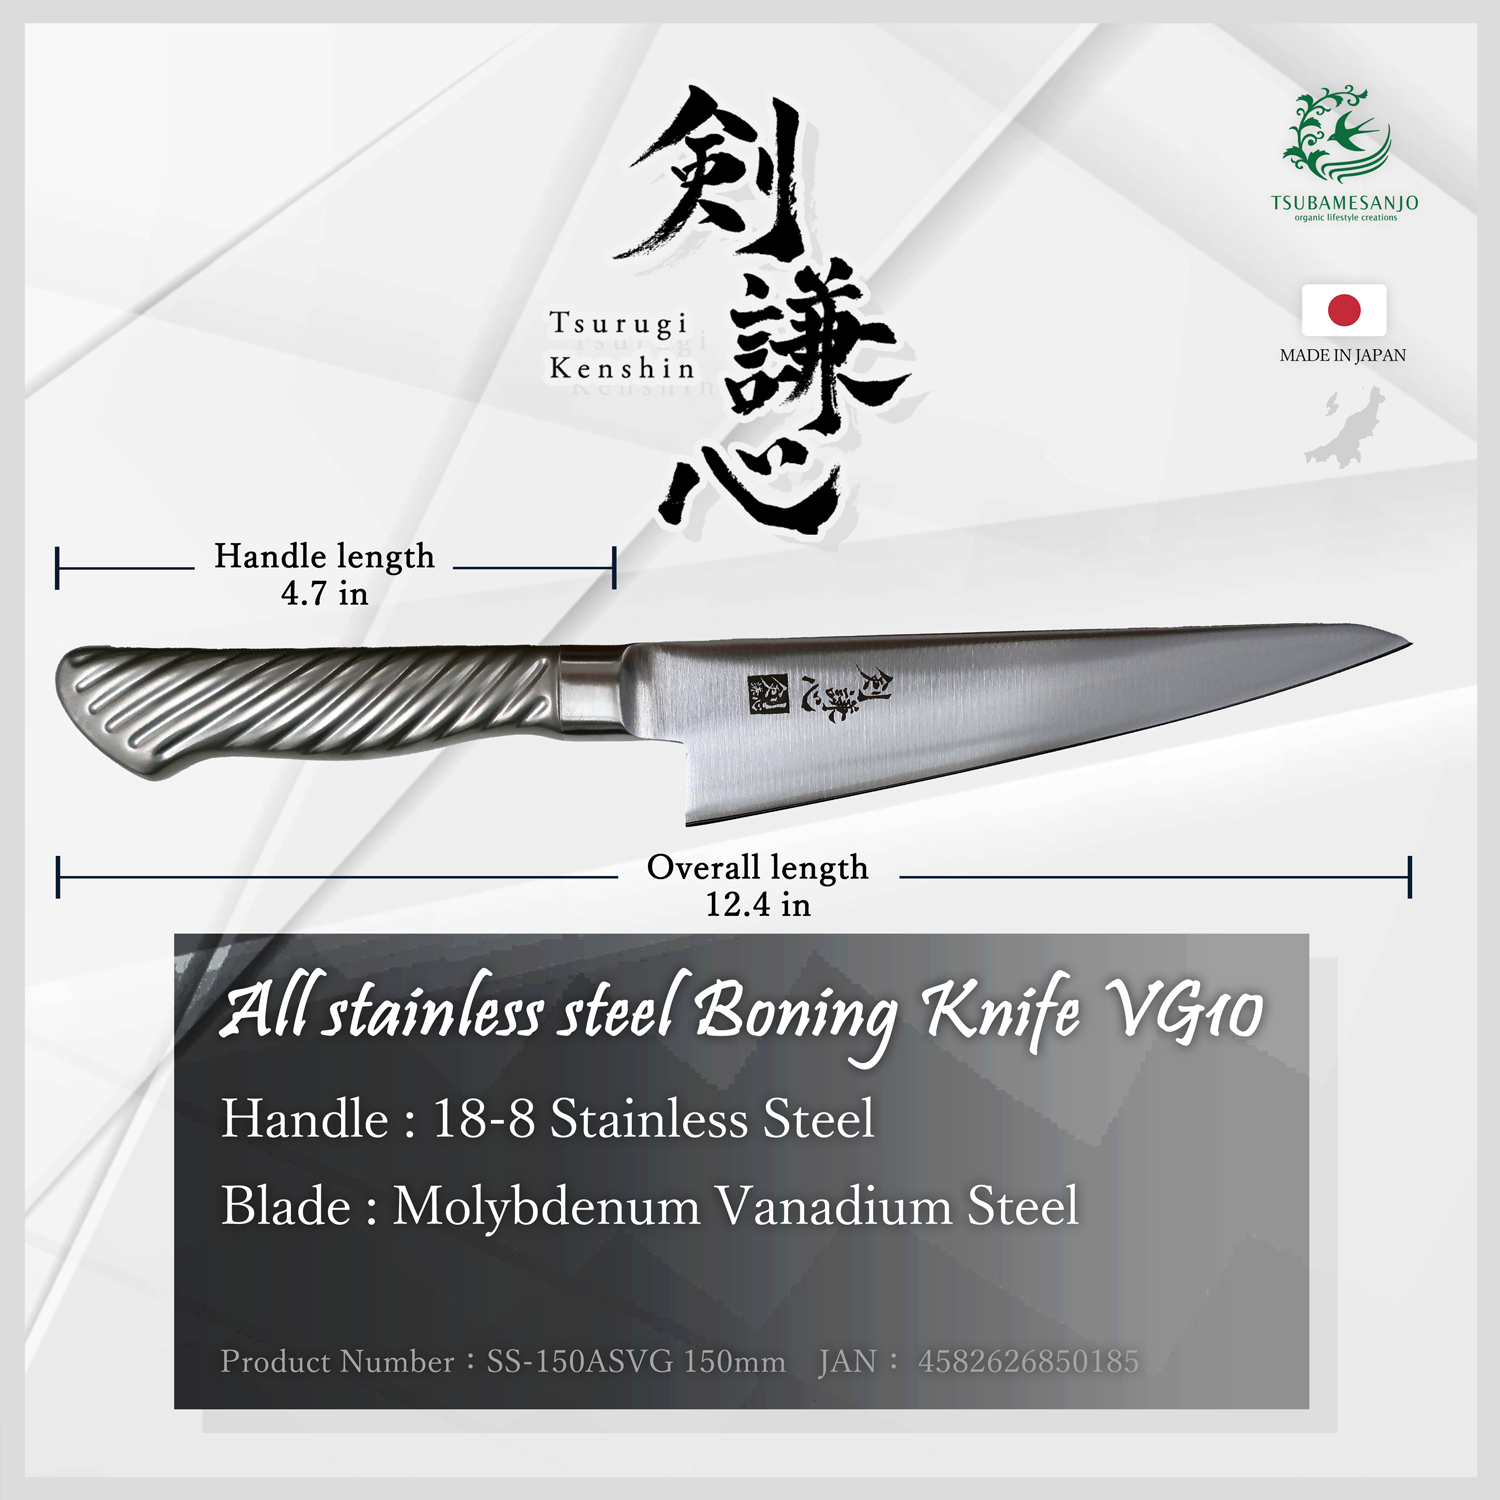 All stainless steel Boning Knife VG10 (SS-150ASVG 150mm)